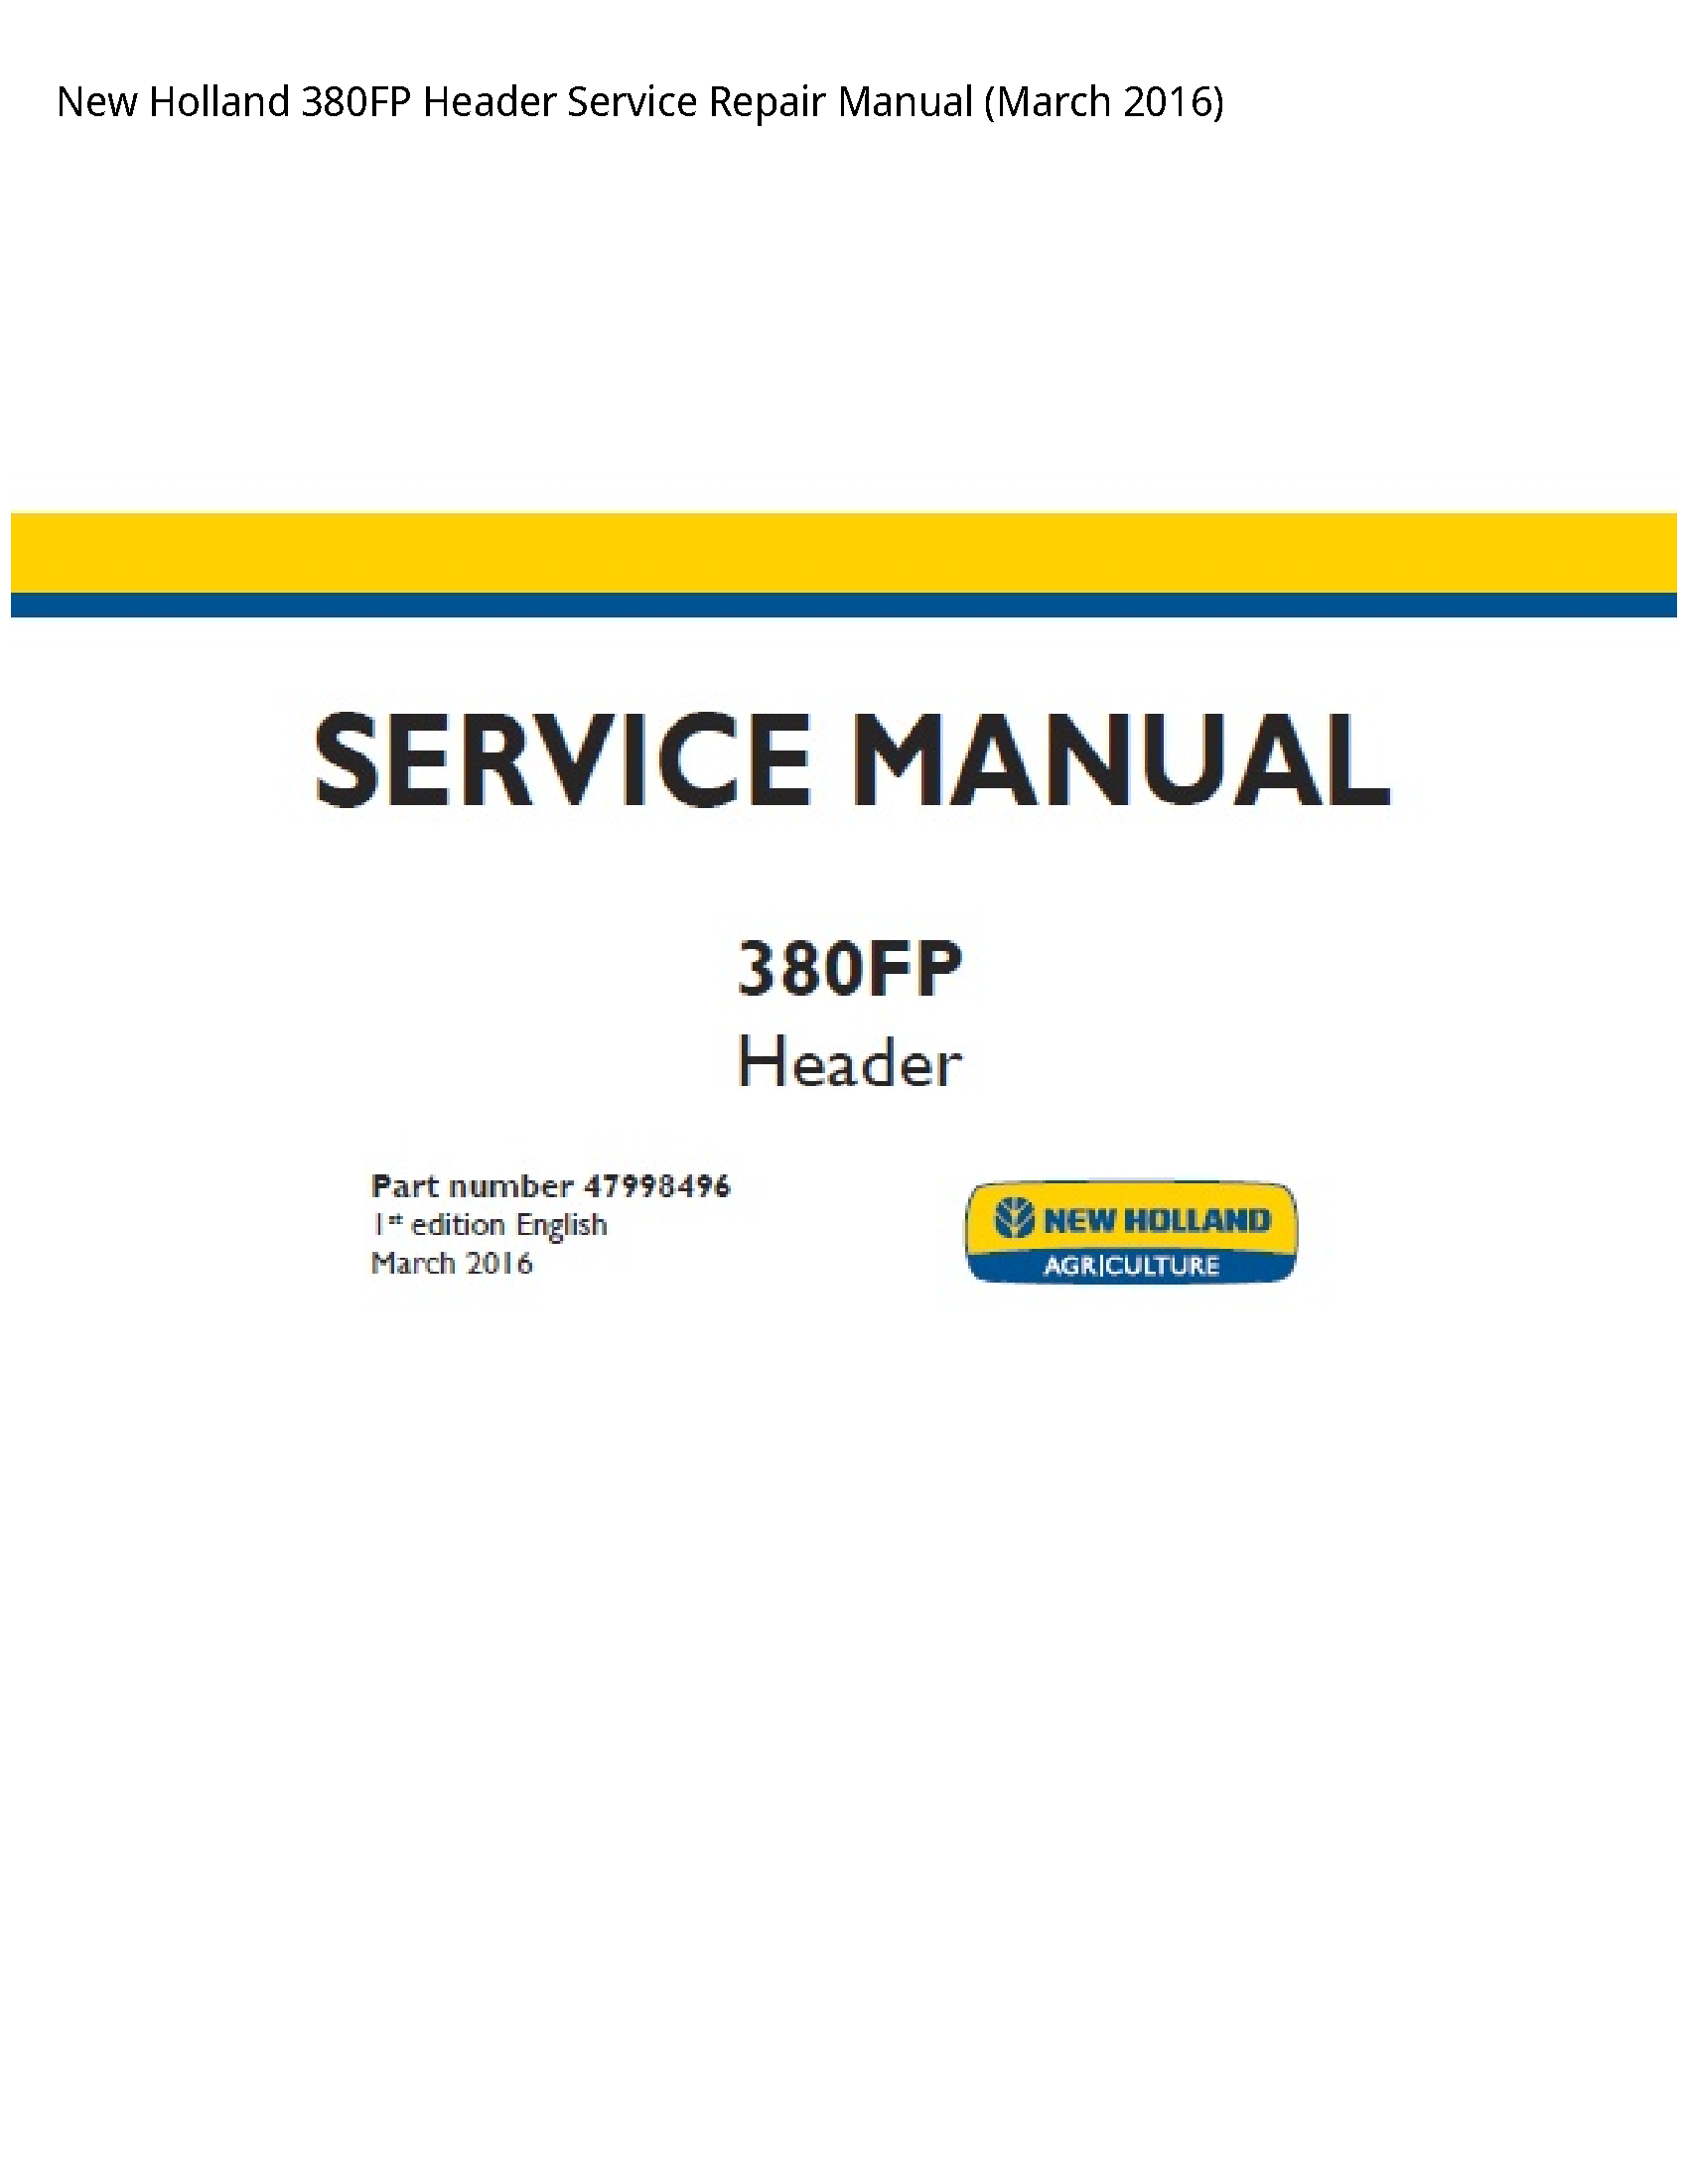 New Holland 380FP Header manual